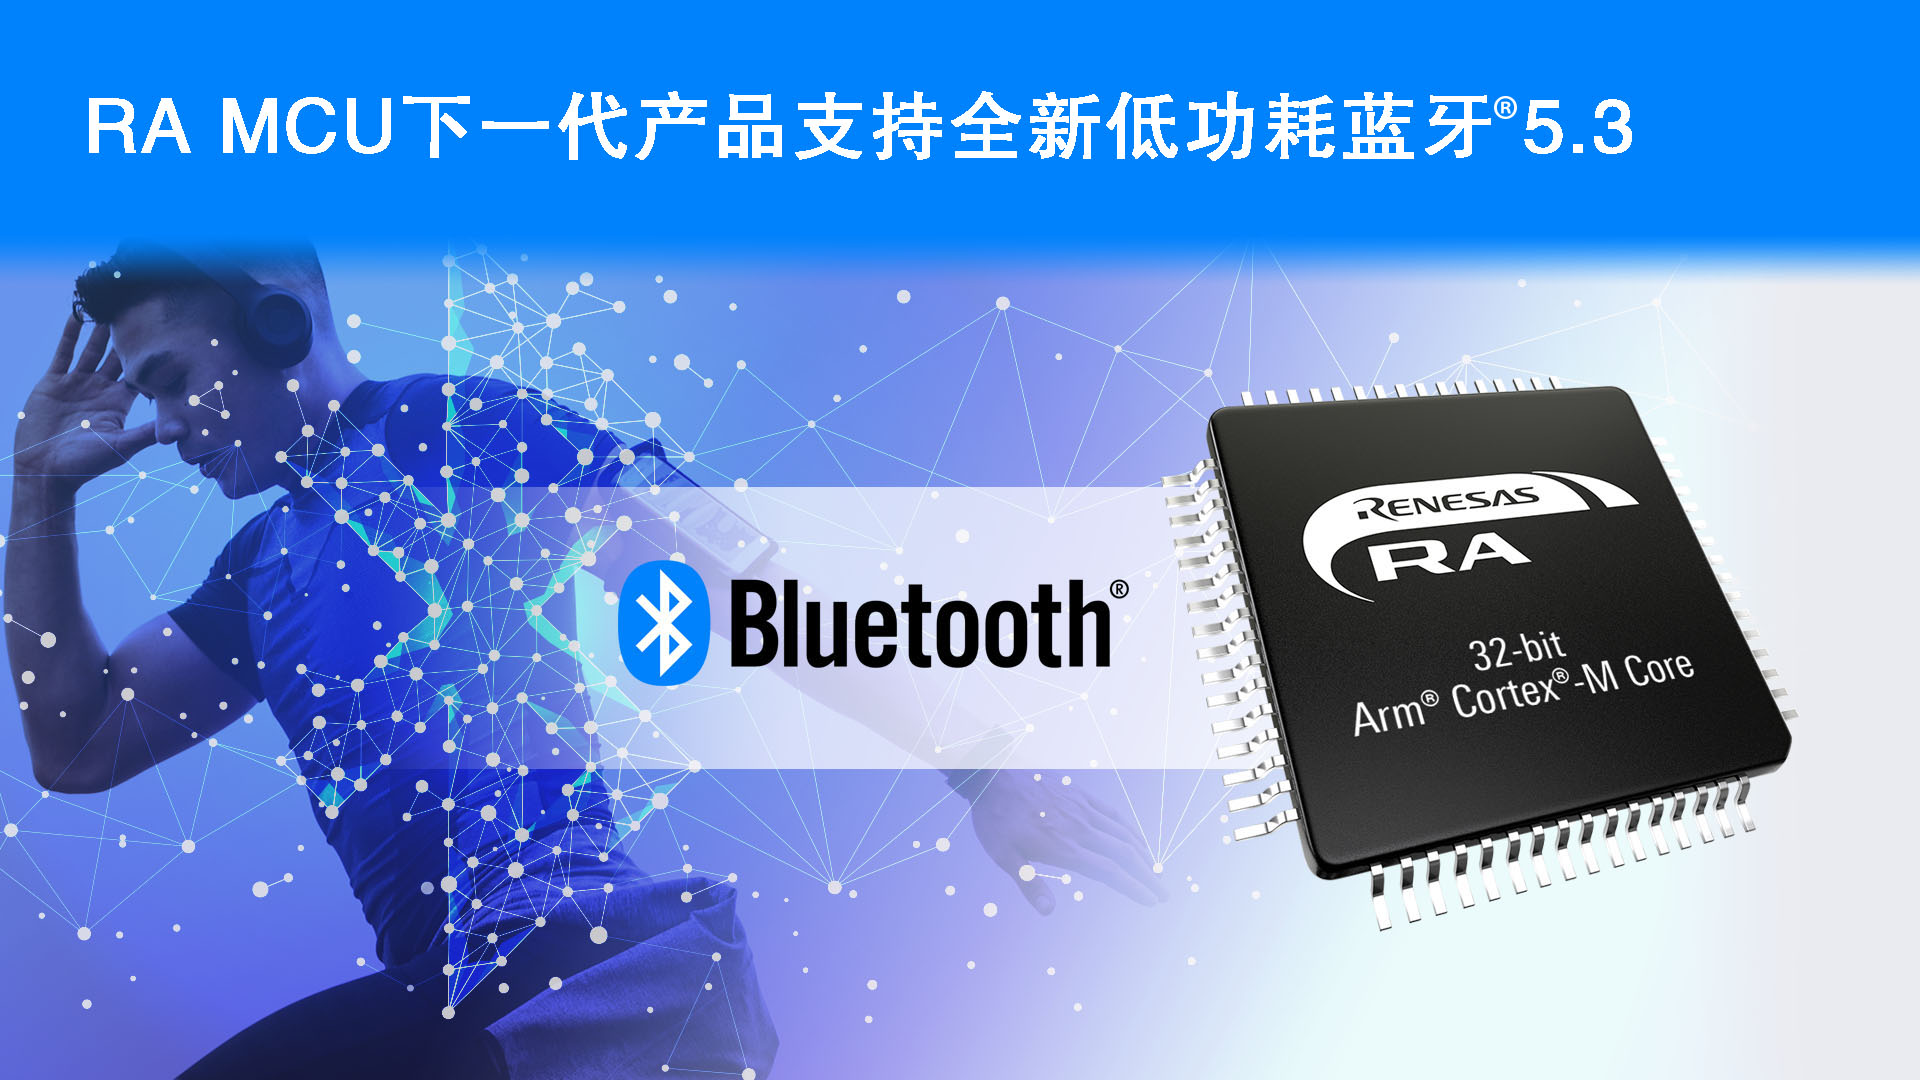 RA MCU下一代产品支持全新低功耗蓝牙® 5.3